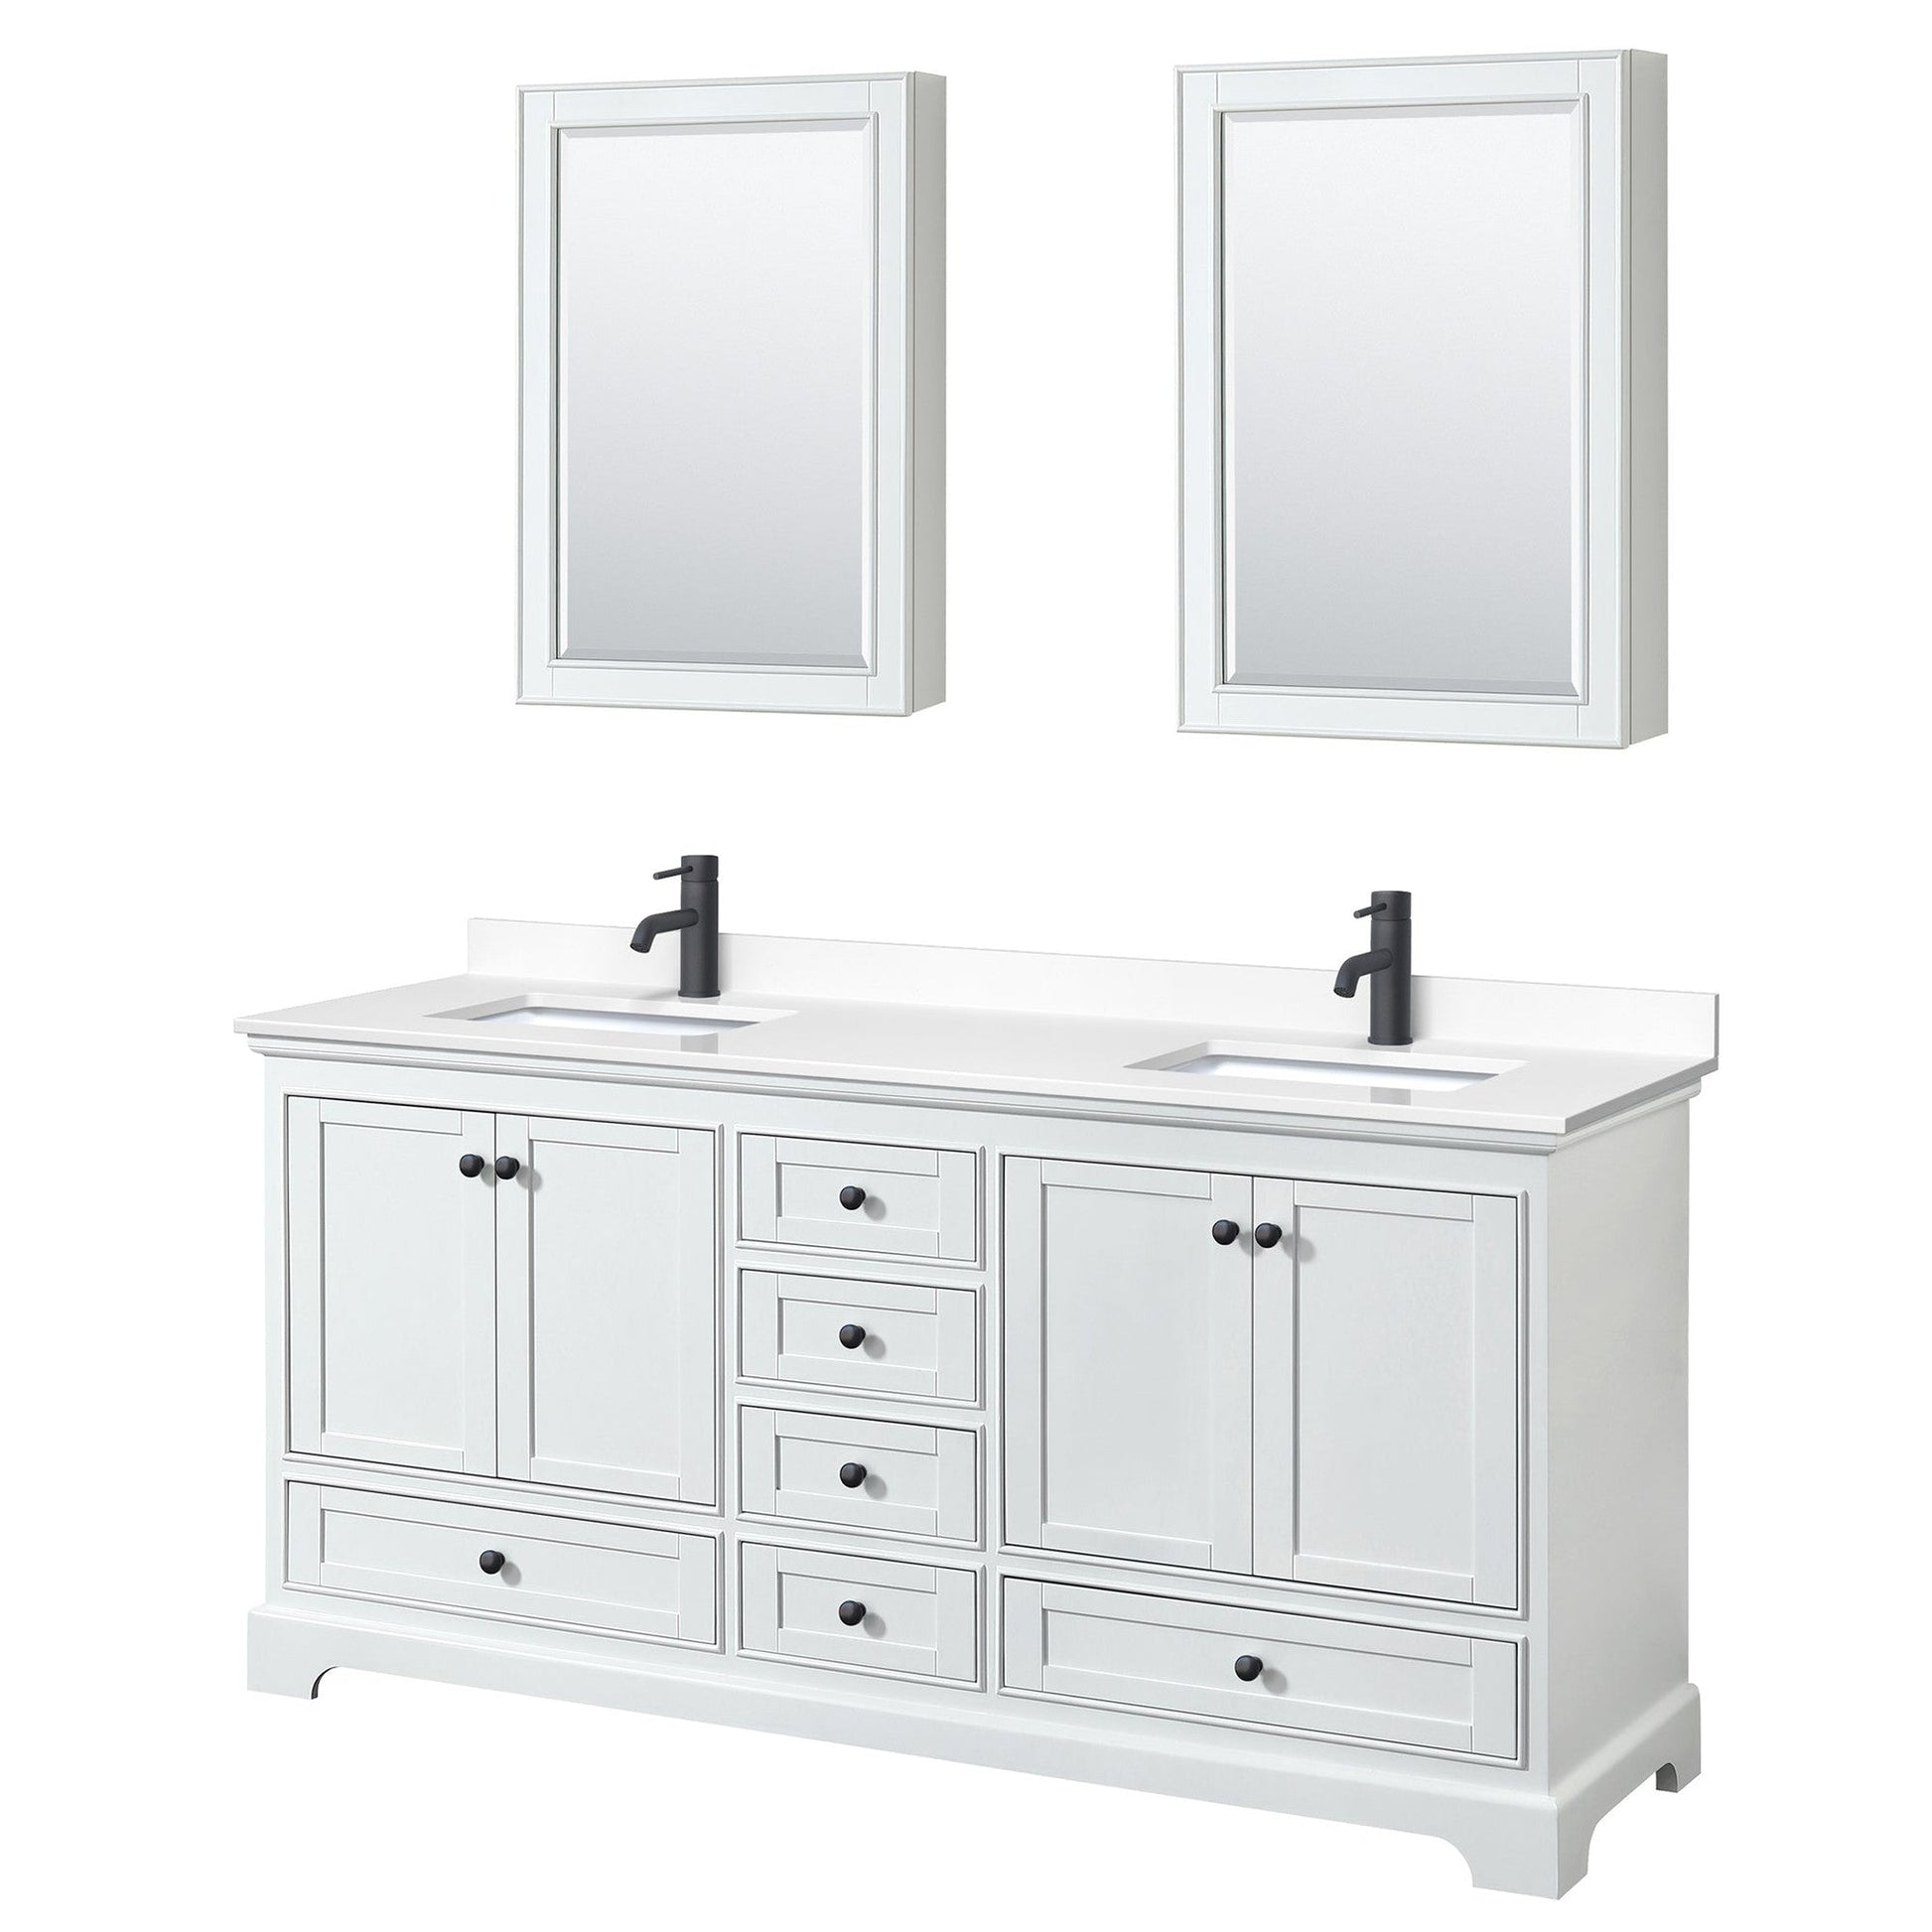 Deborah 72" Double Bathroom Vanity in White, White Cultured Marble Countertop, Undermount Square Sinks, Matte Black Trim, Medicine Cabinets